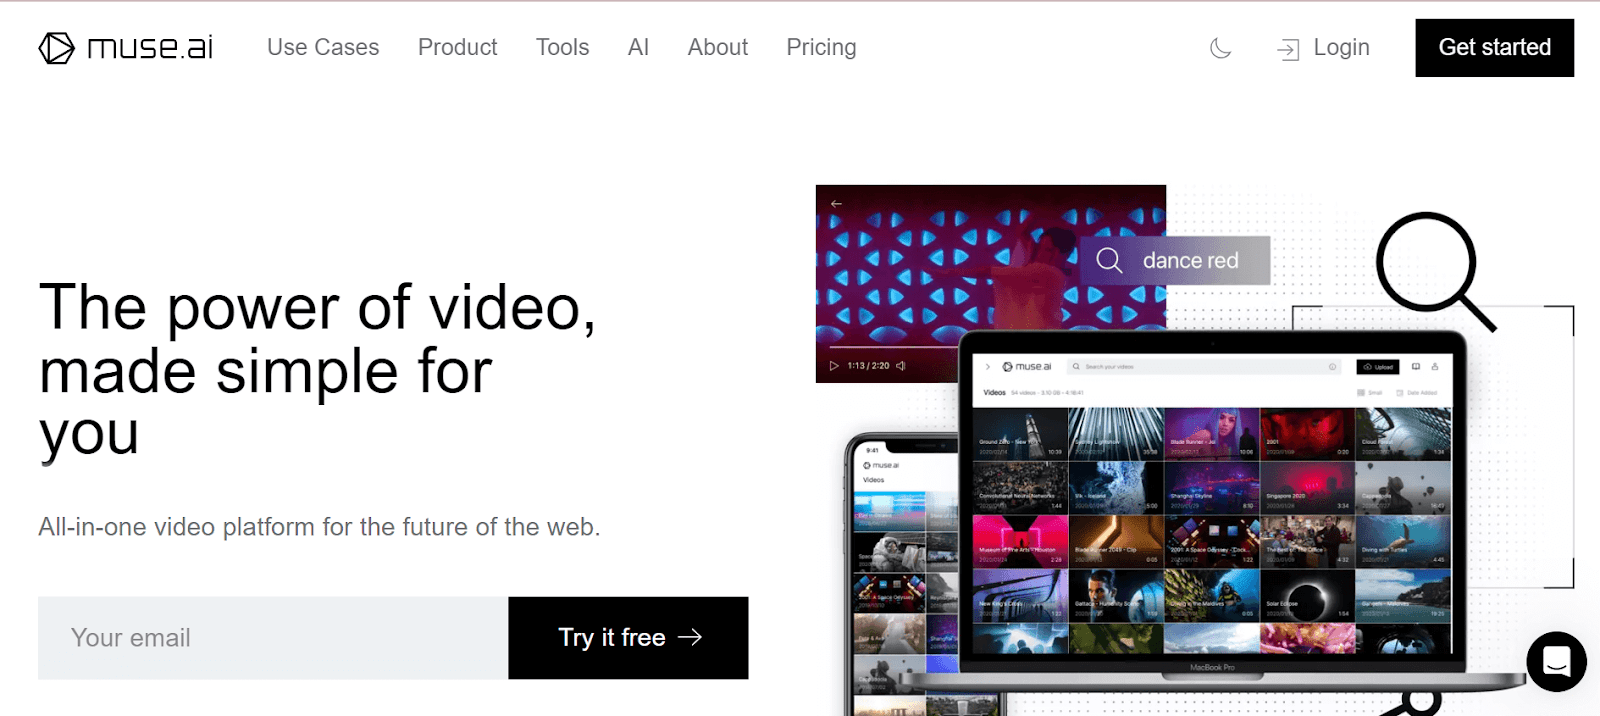 A screenshot of Muse.ai's website